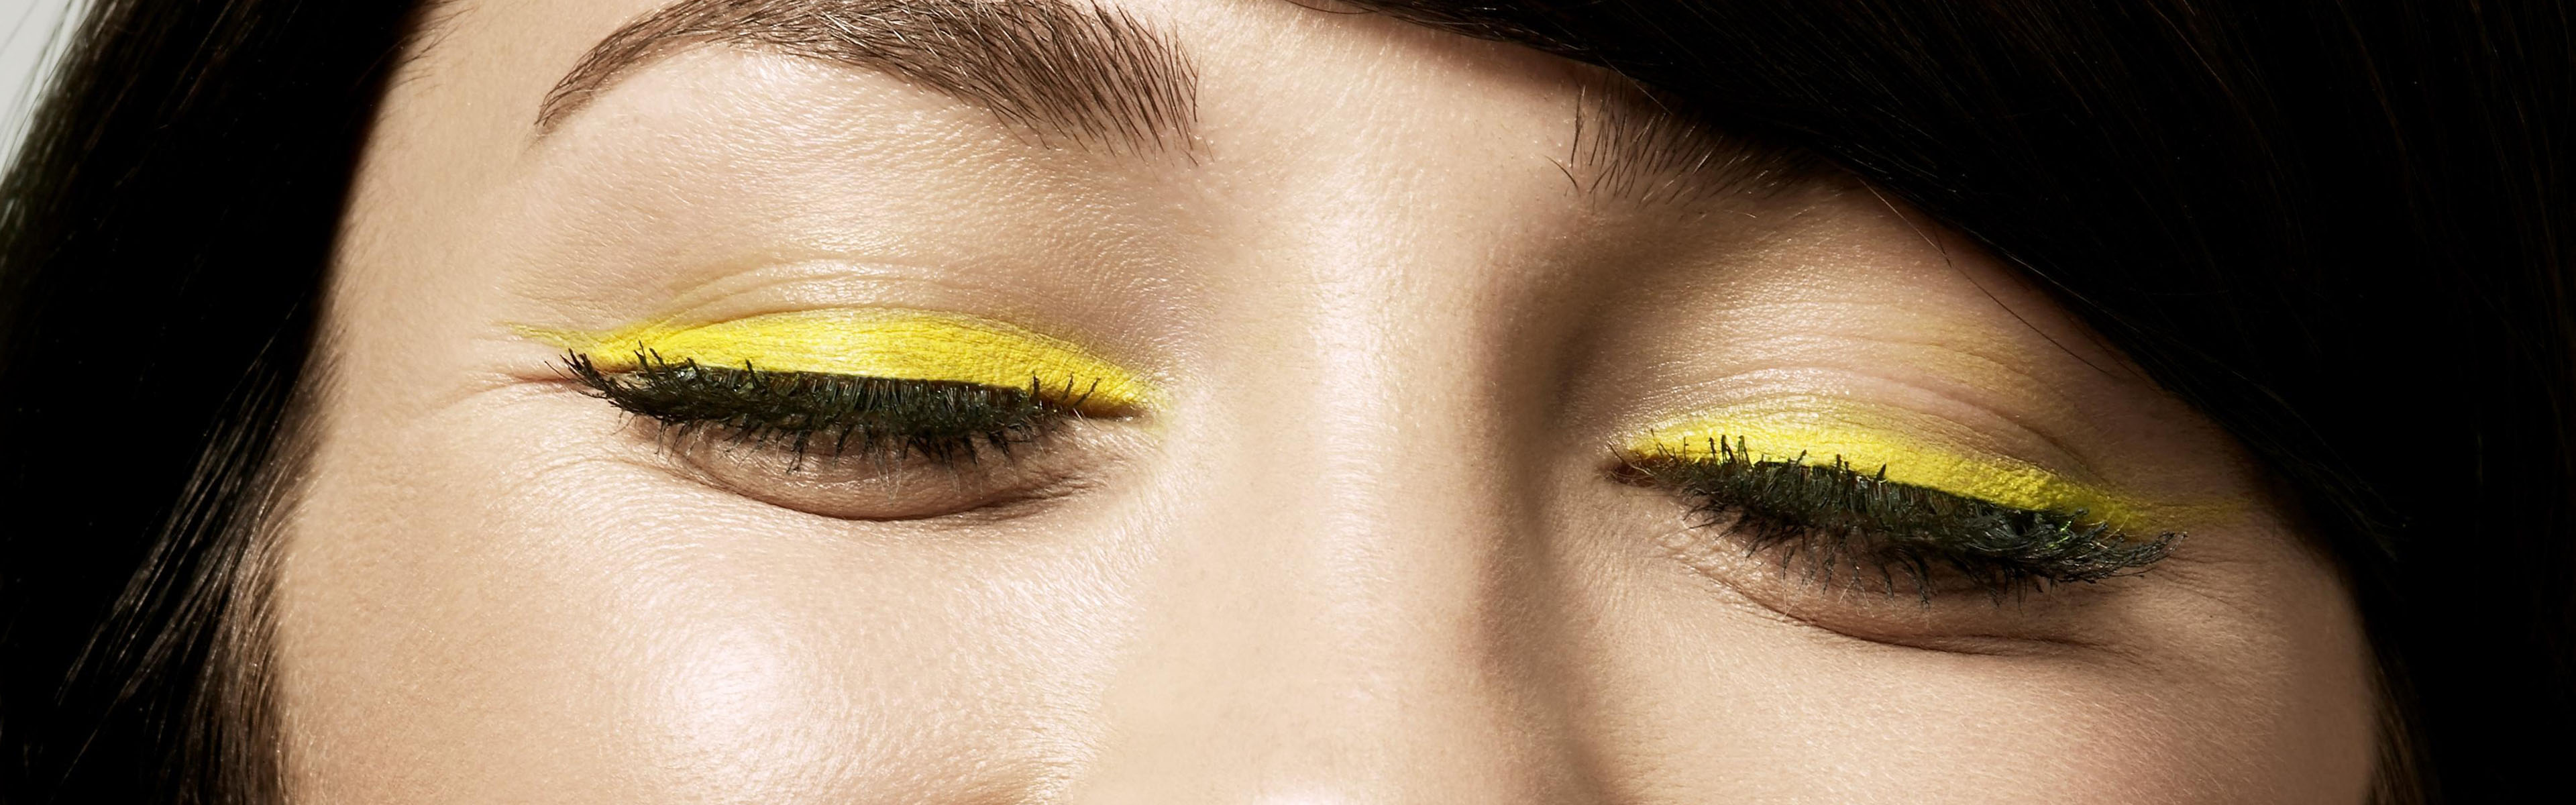 close-up, eyes, yellow, eye shadow - desktop wallpaper